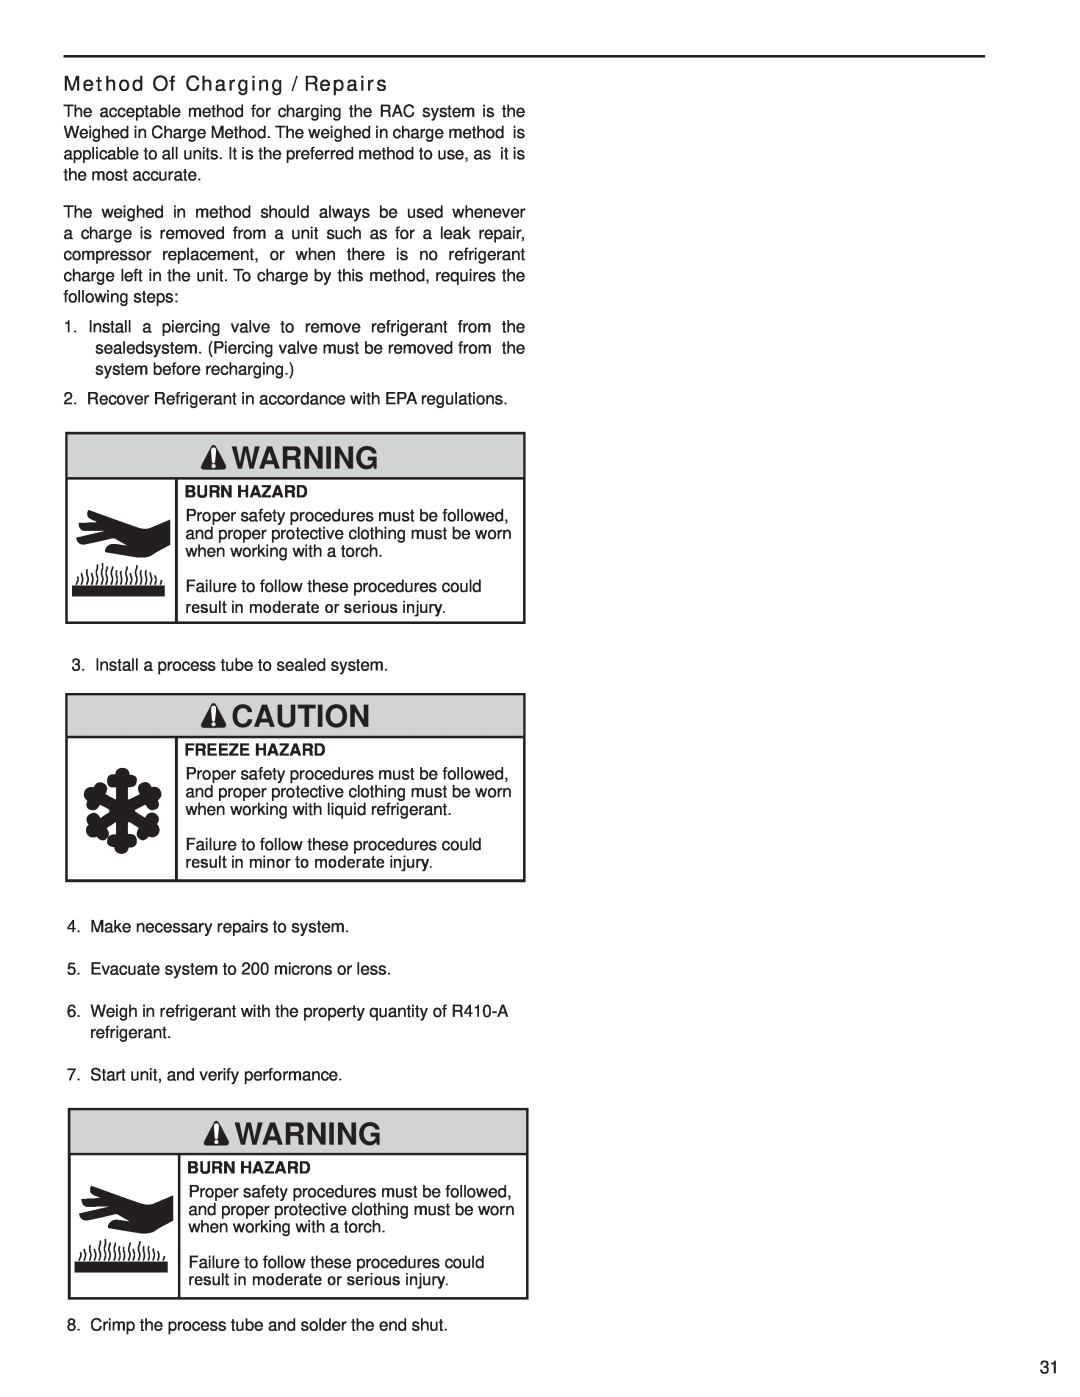 Friedrich SQ05N10, SQ10N10, SQ08N10, SQ06N10, EQ08N11 manual Method Of Charging / Repairs, Burn Hazard, Freeze Hazard 